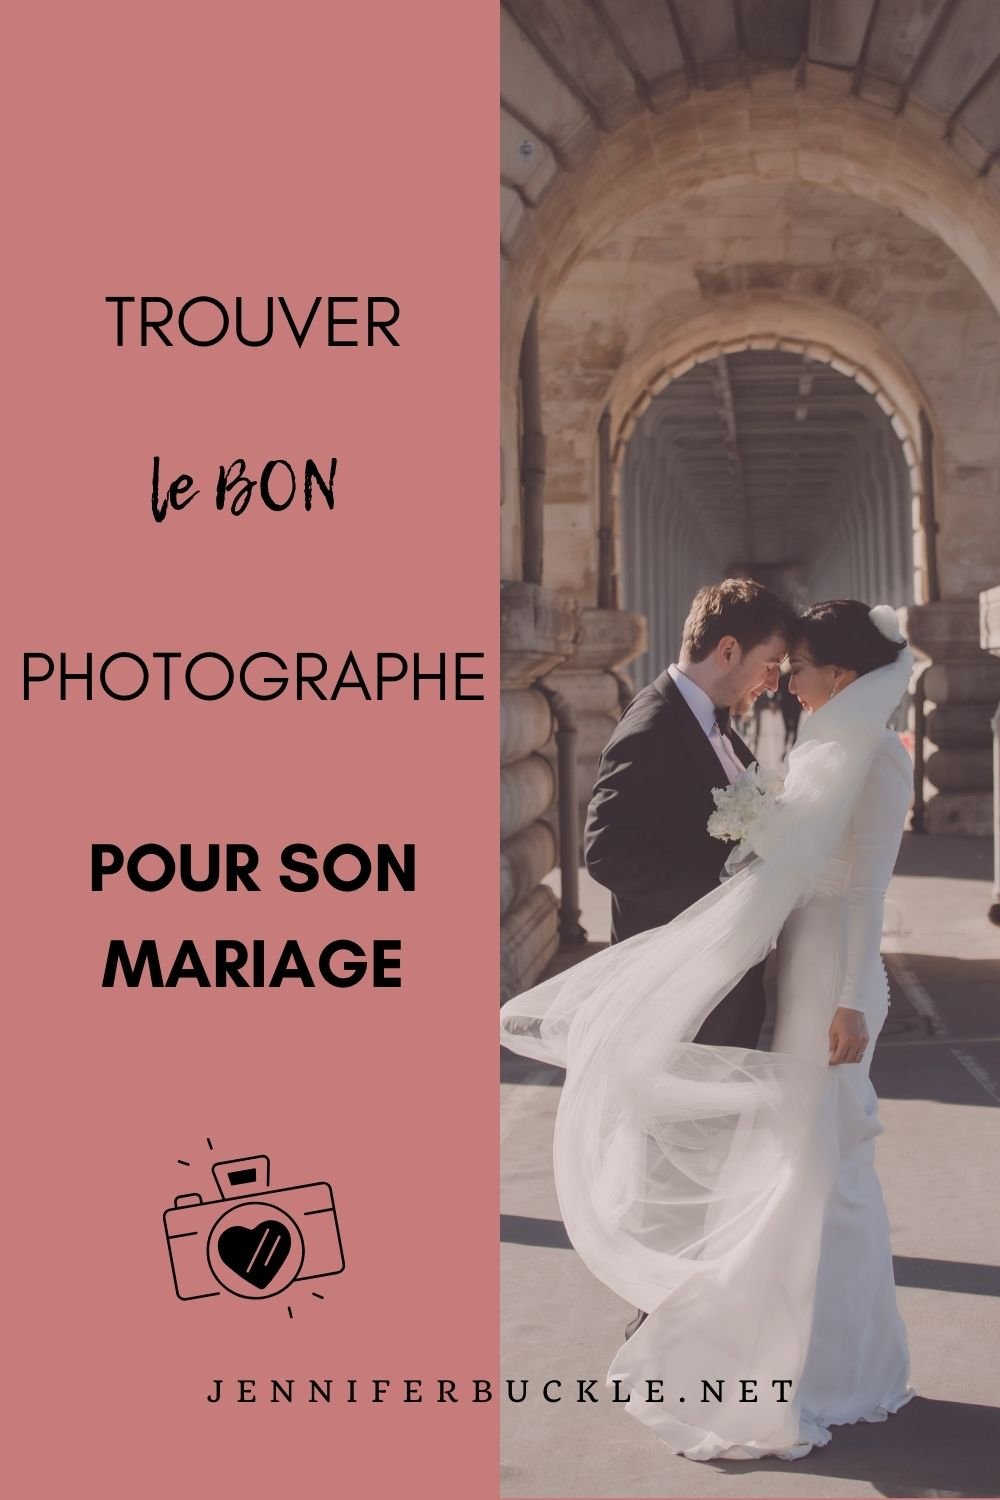 Jennifer Buckle photographe Paris trouver photographe mariage 2.jpg